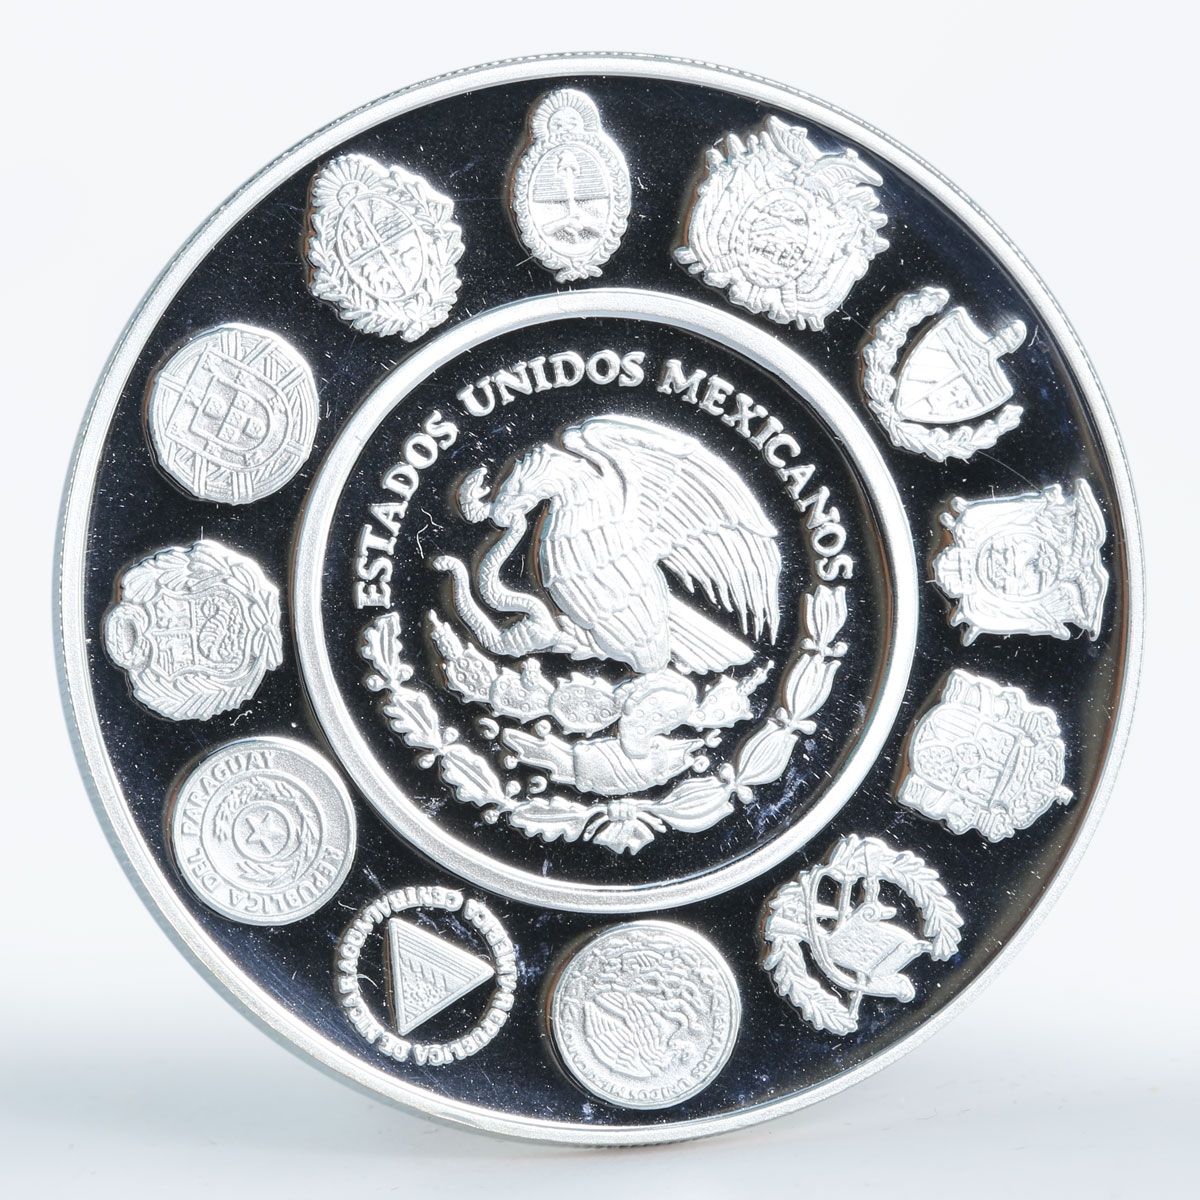 Mexico 5 Pesos Jarabe tapatio proof silver coin 1997